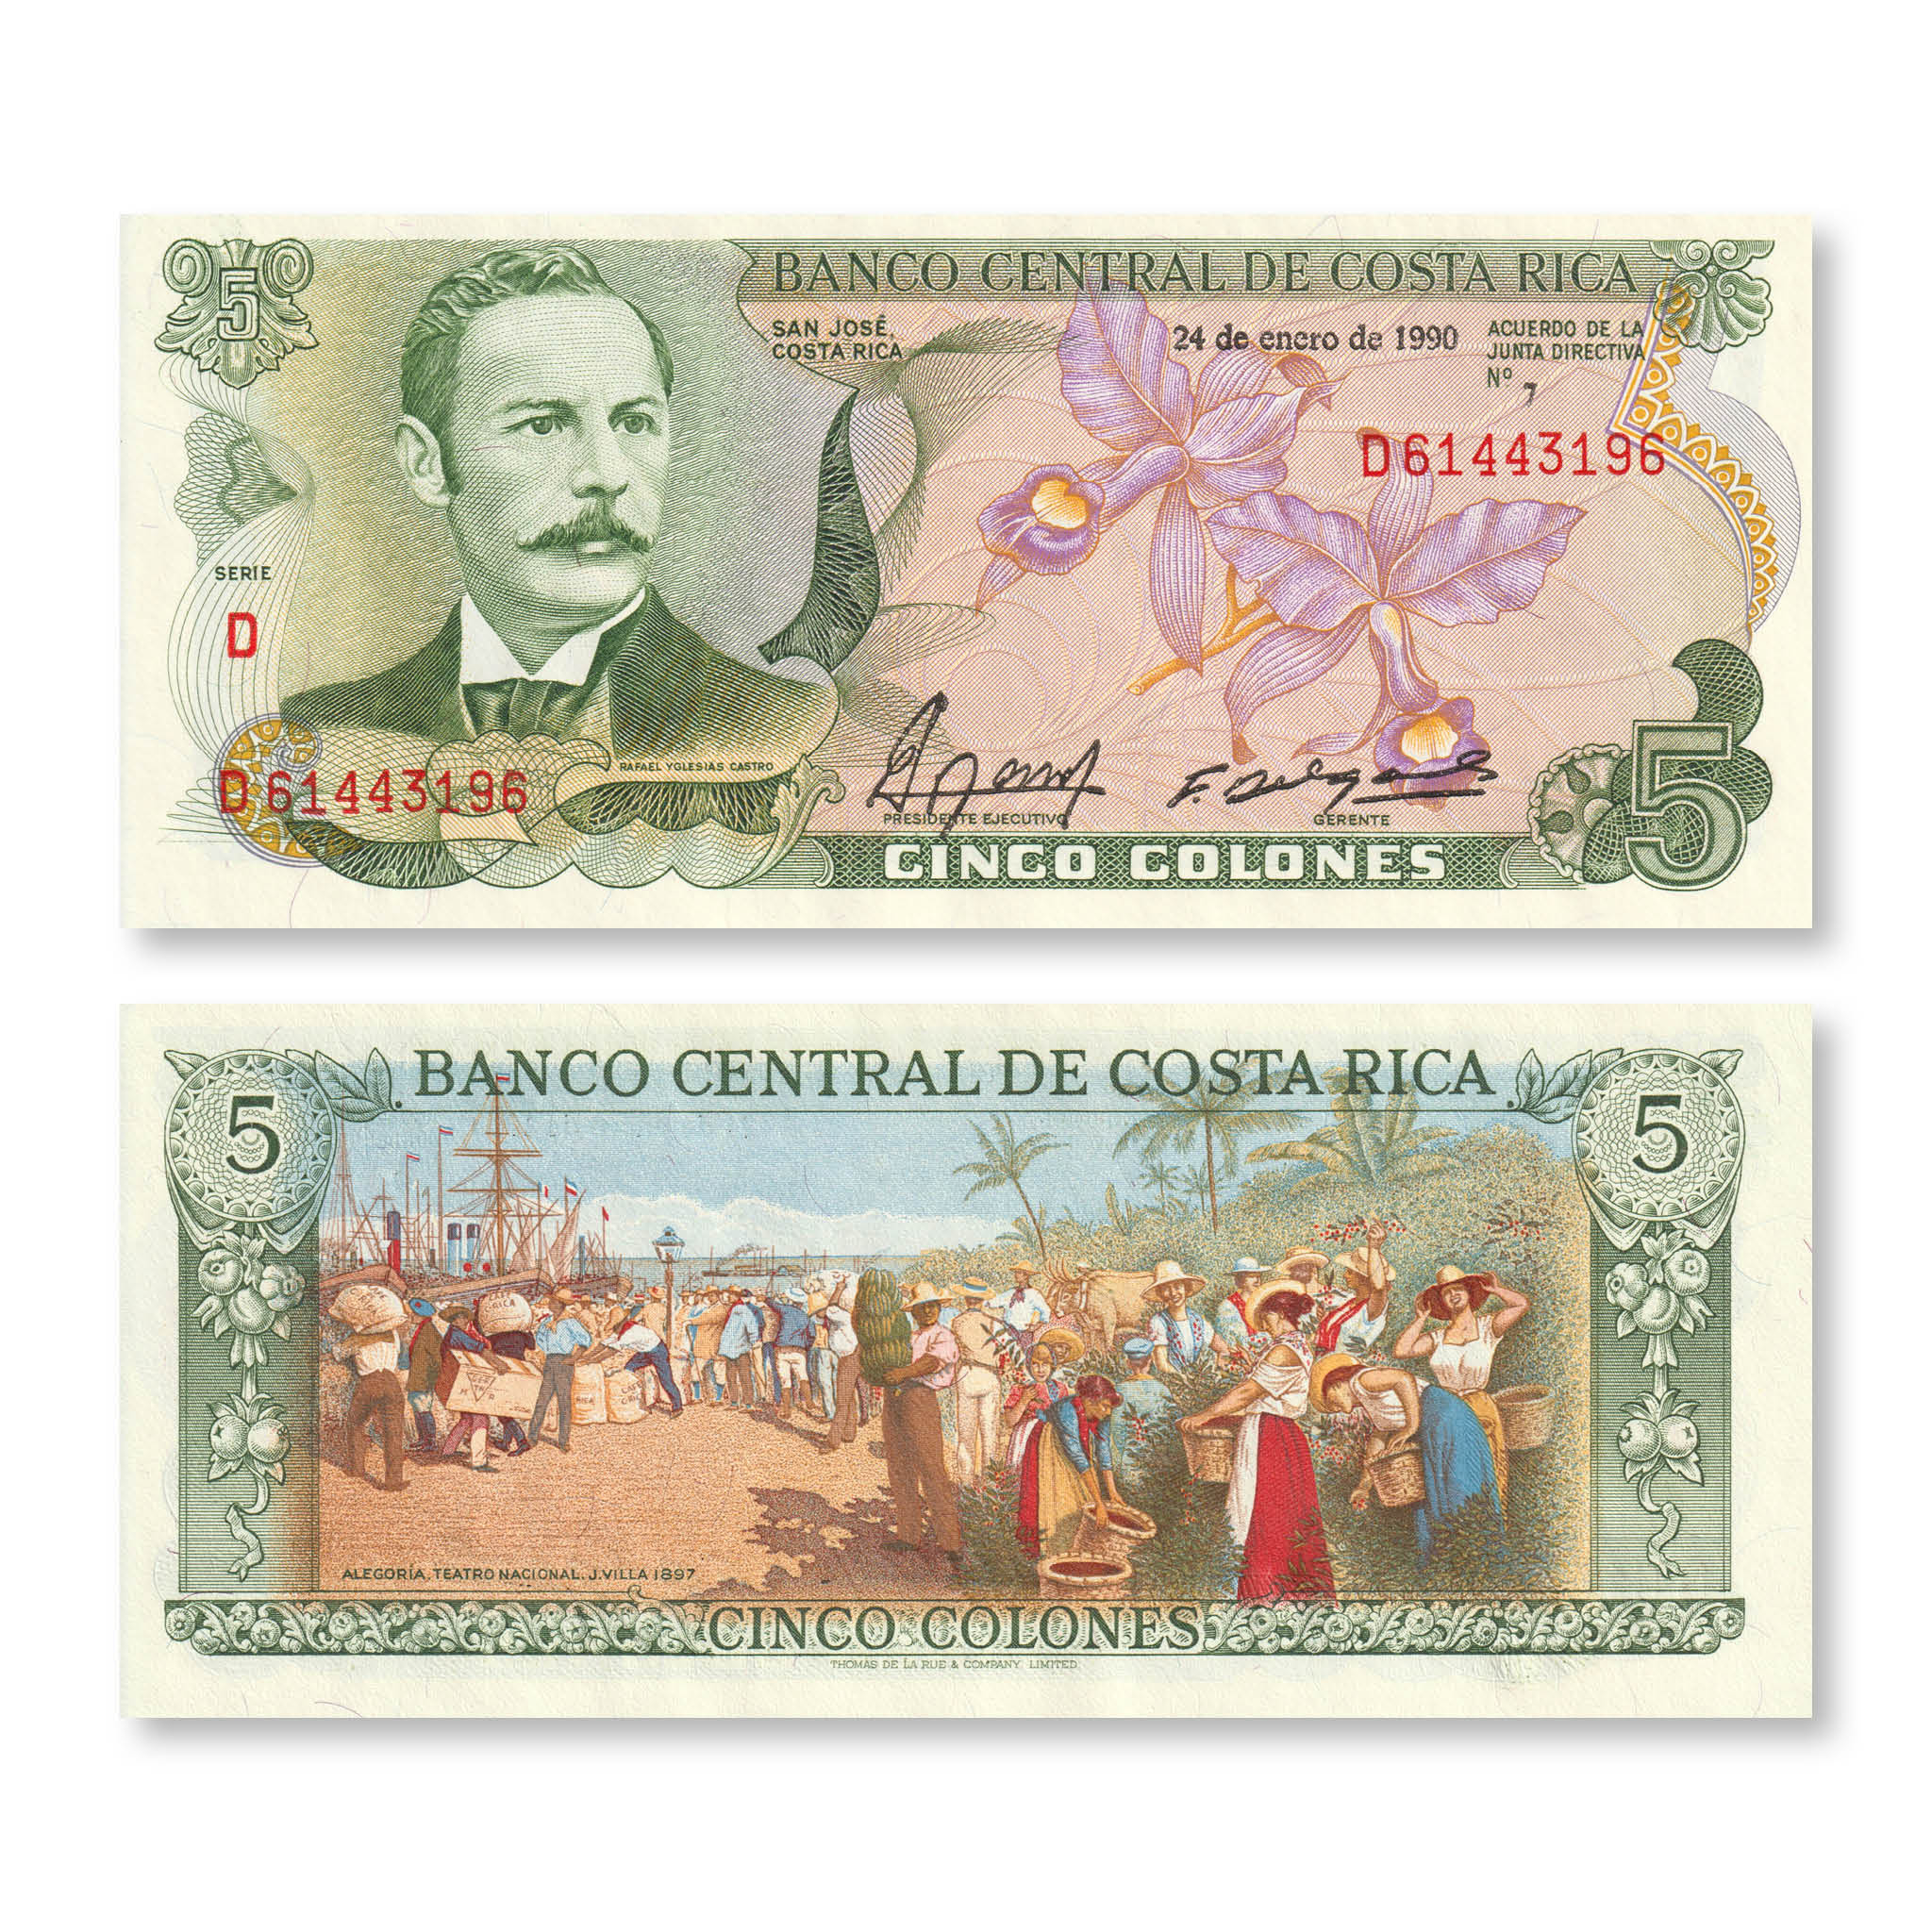 Costa Rica 5 Colones, 1990, B522ff, P236e, UNC - Robert's World Money - World Banknotes